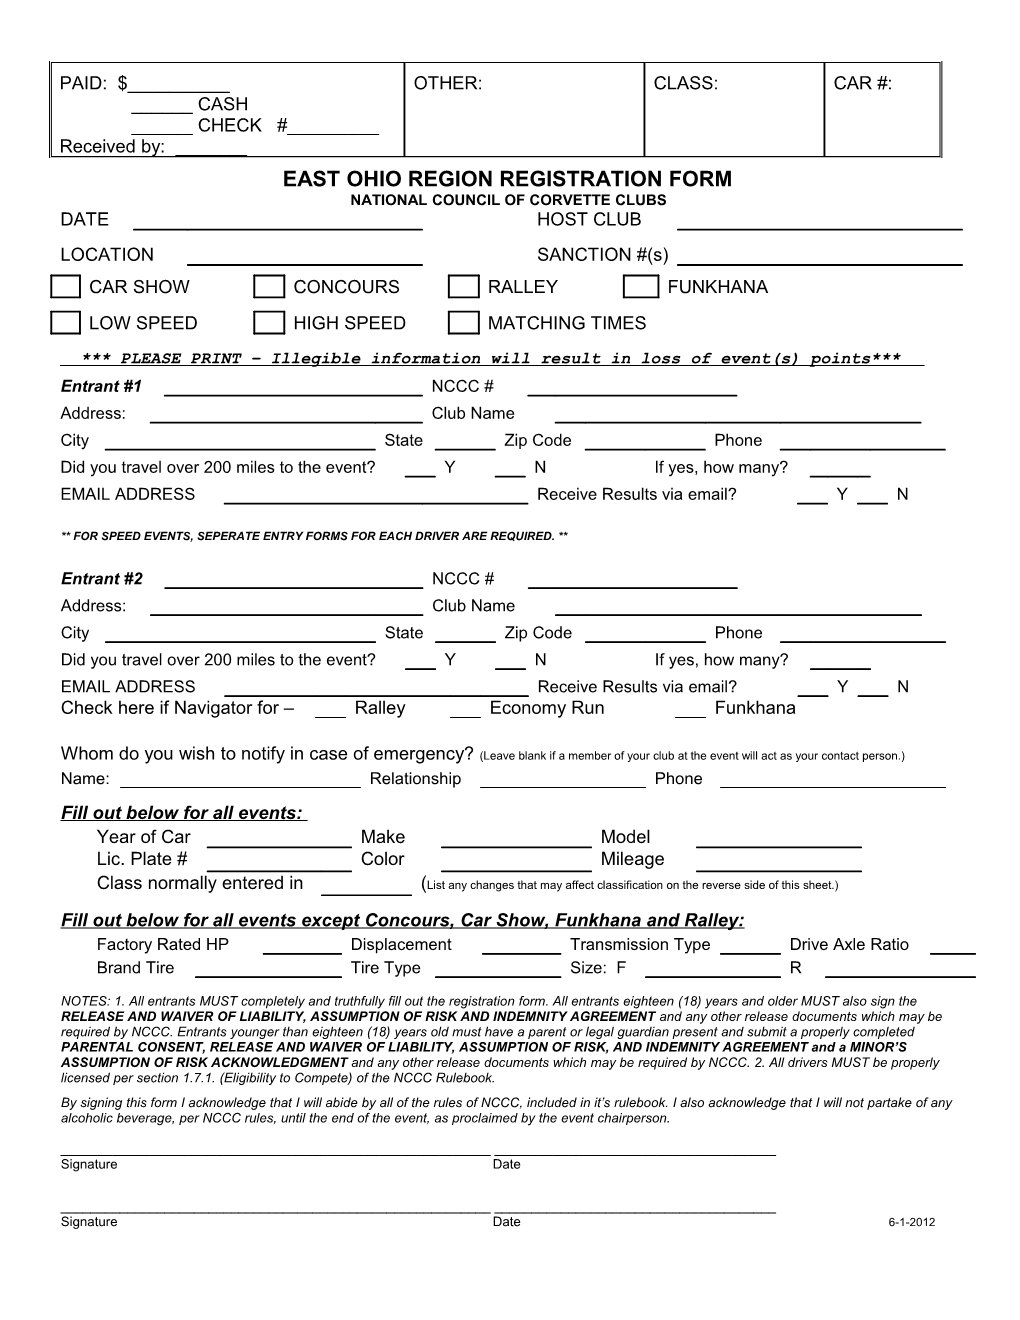 East Ohio Region Registration Form